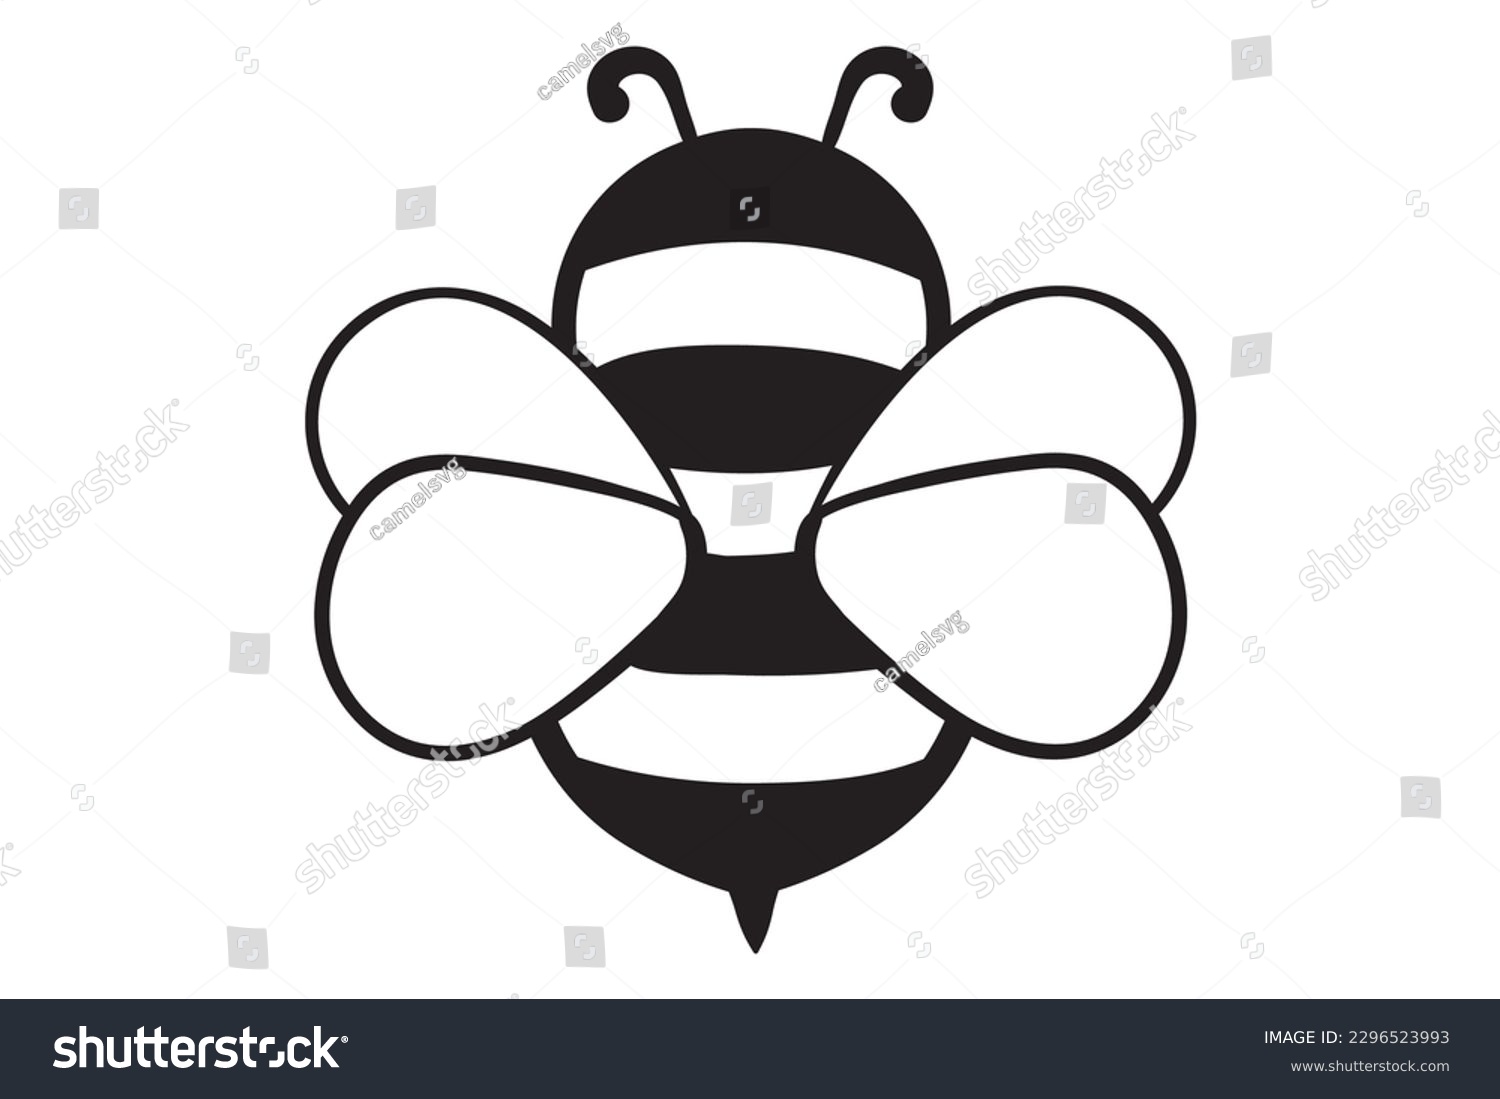 SVG of Bee, Honeybee, Handwritten Bee, Bumble Bee Svg, Honey bee, insect, animal, flying, fly, cute, wings, wing, bumblebee, bumble, honeybee, bug, black svg